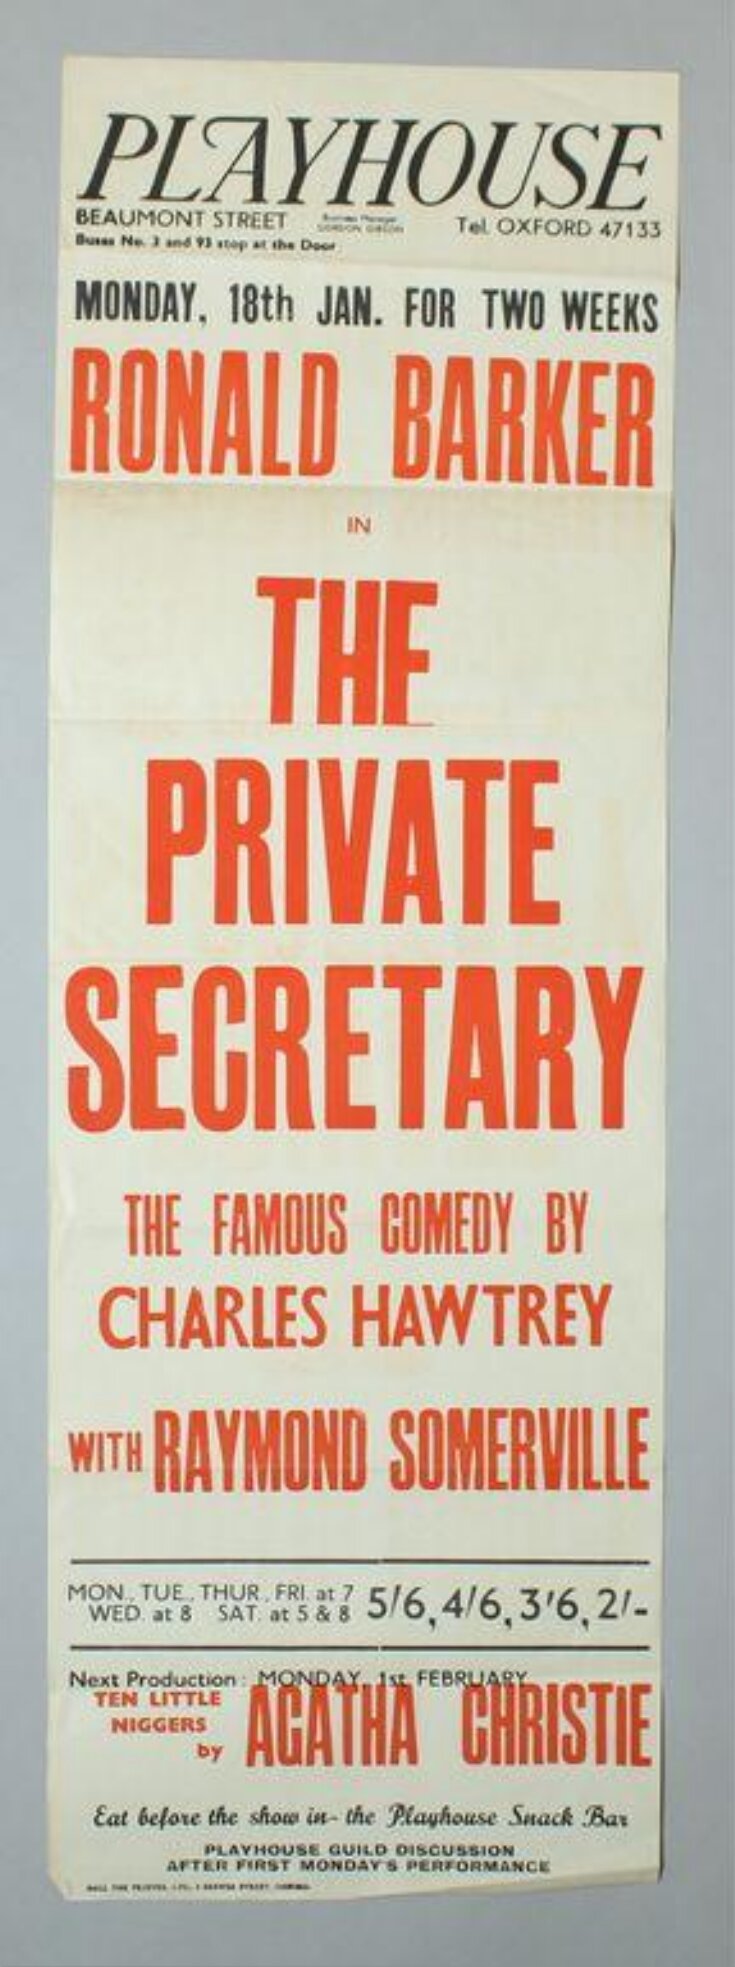 The Private Secretary top image